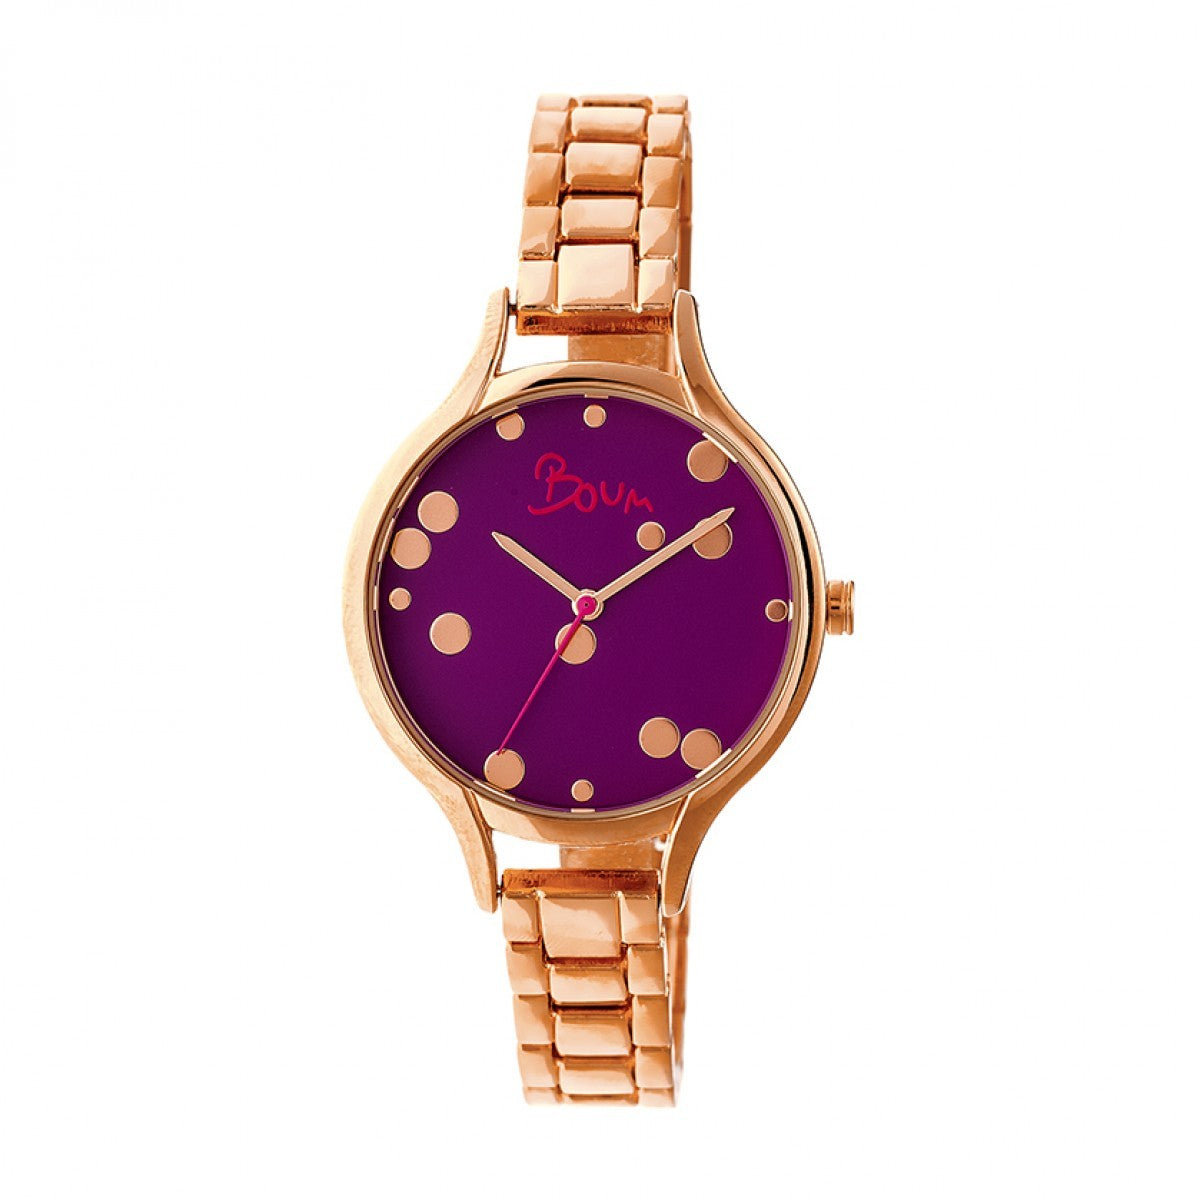 Boum Bulle Bracelet Watch - Rose Gold/Purple - BOUBM4706